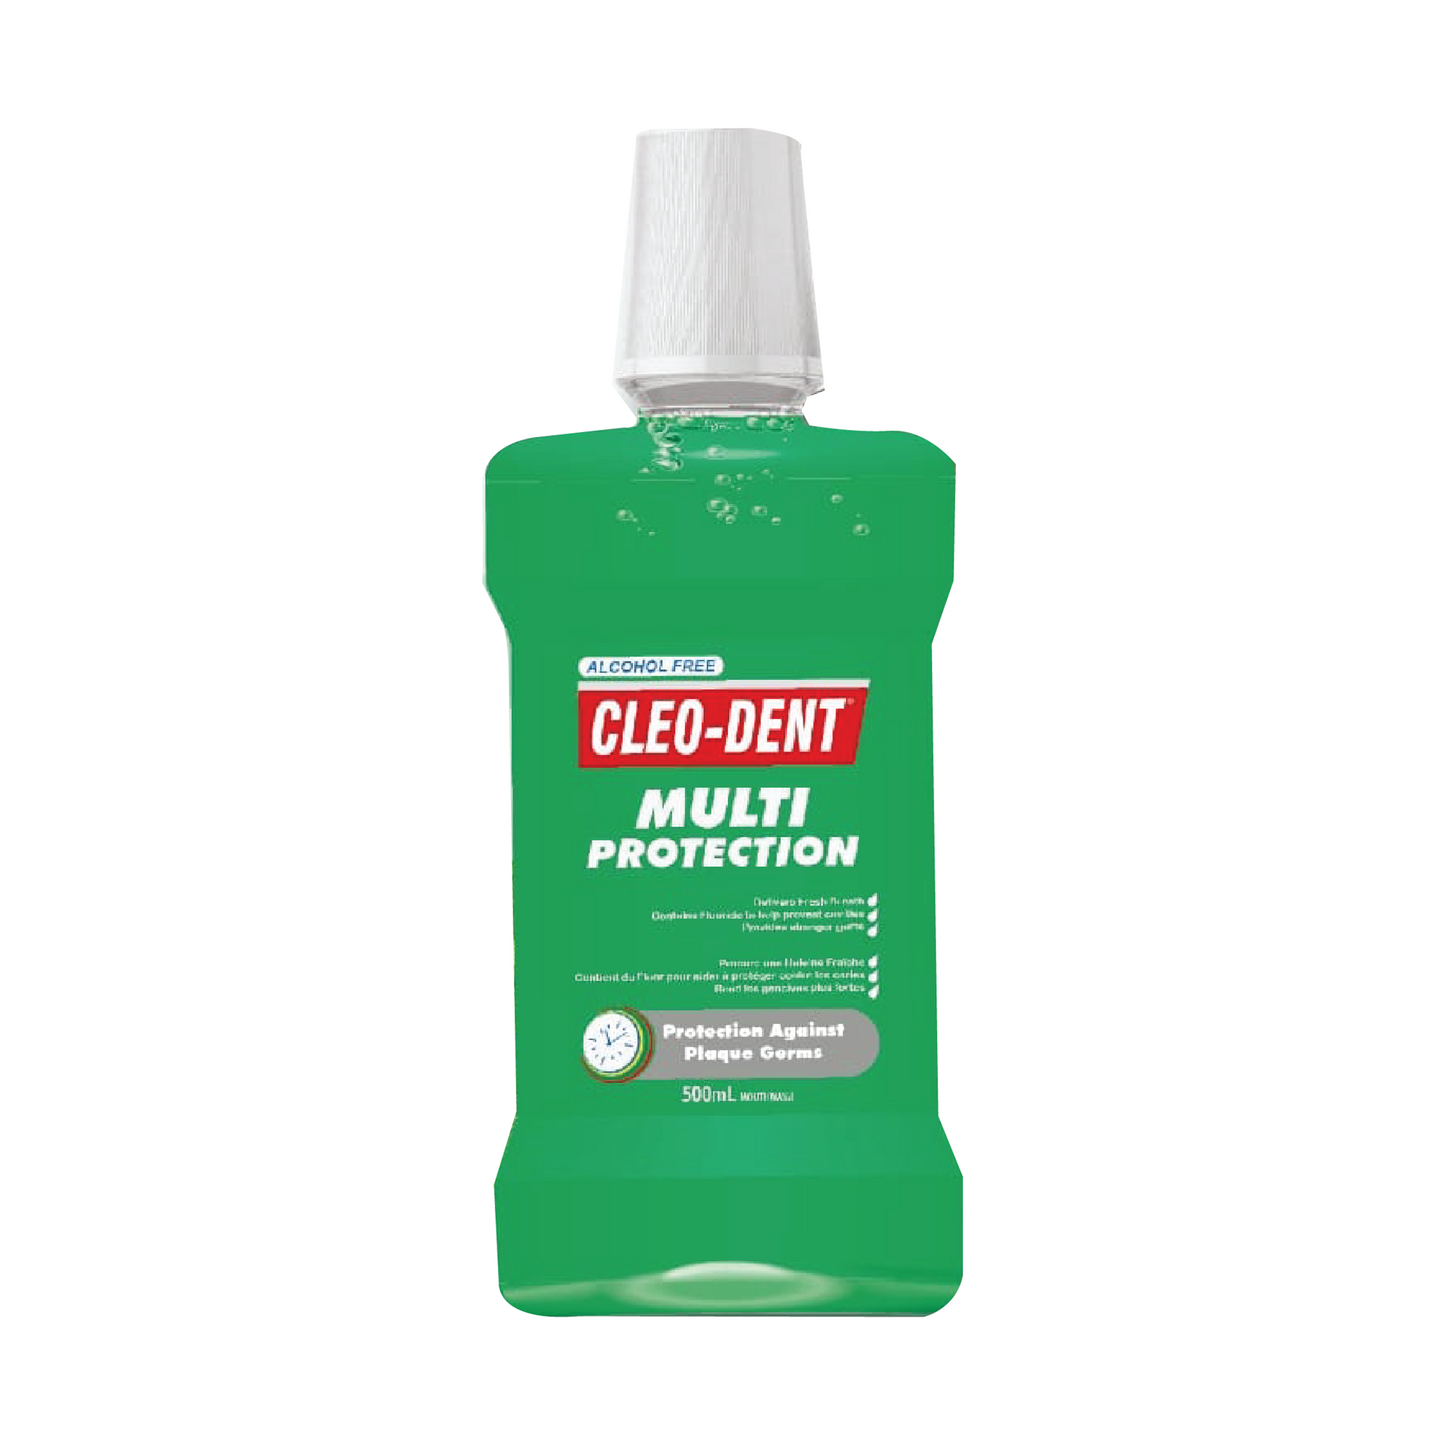 Cleo-Dent Multi Protection Mouthwash